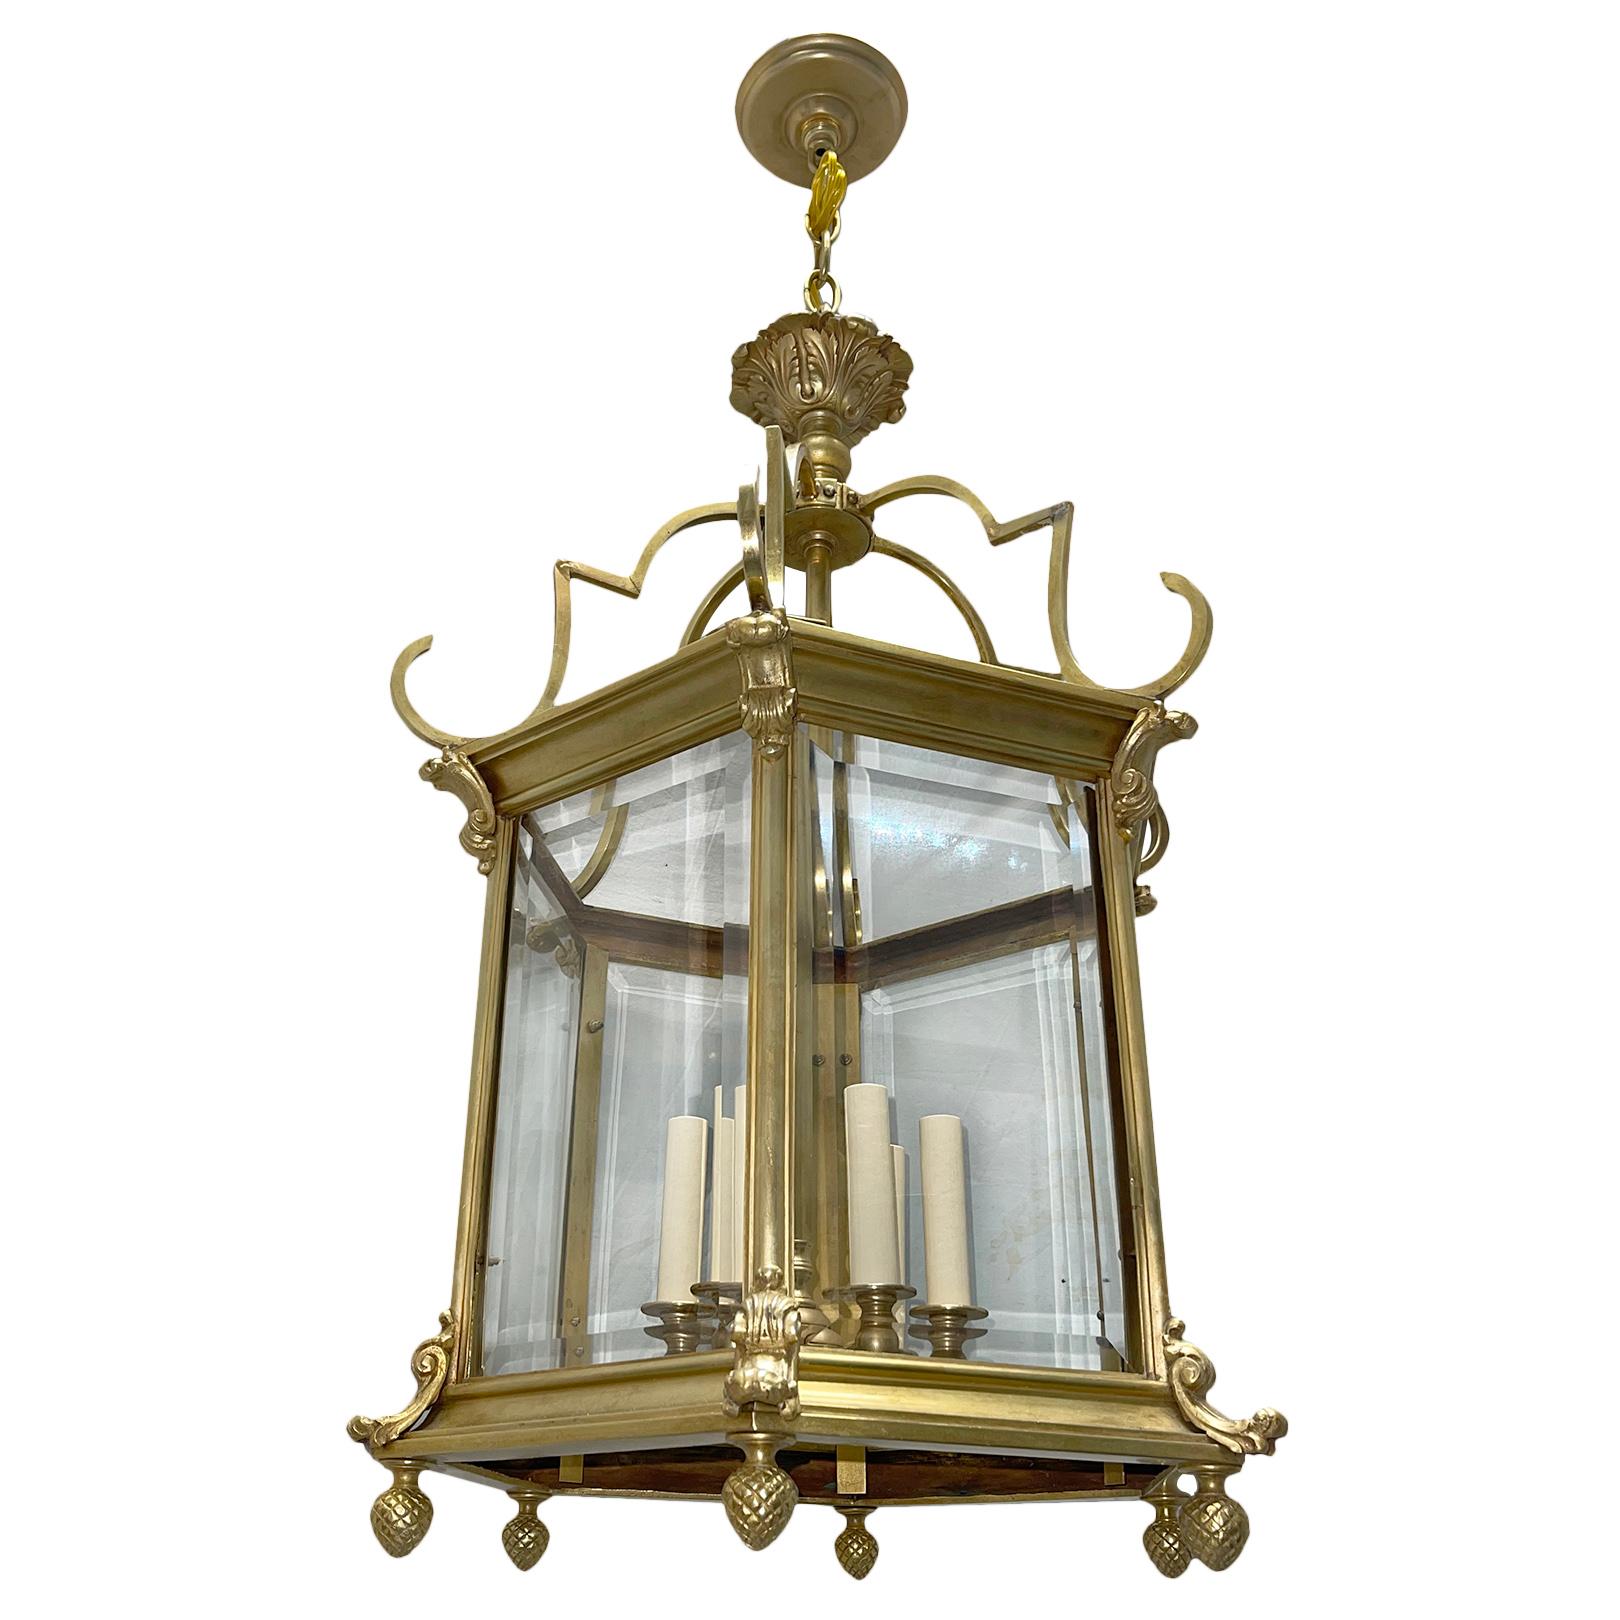 Circa 1920's neoclassic style bronze lantern of hexagonal shape with original patina.

Measurements:
Height: 31